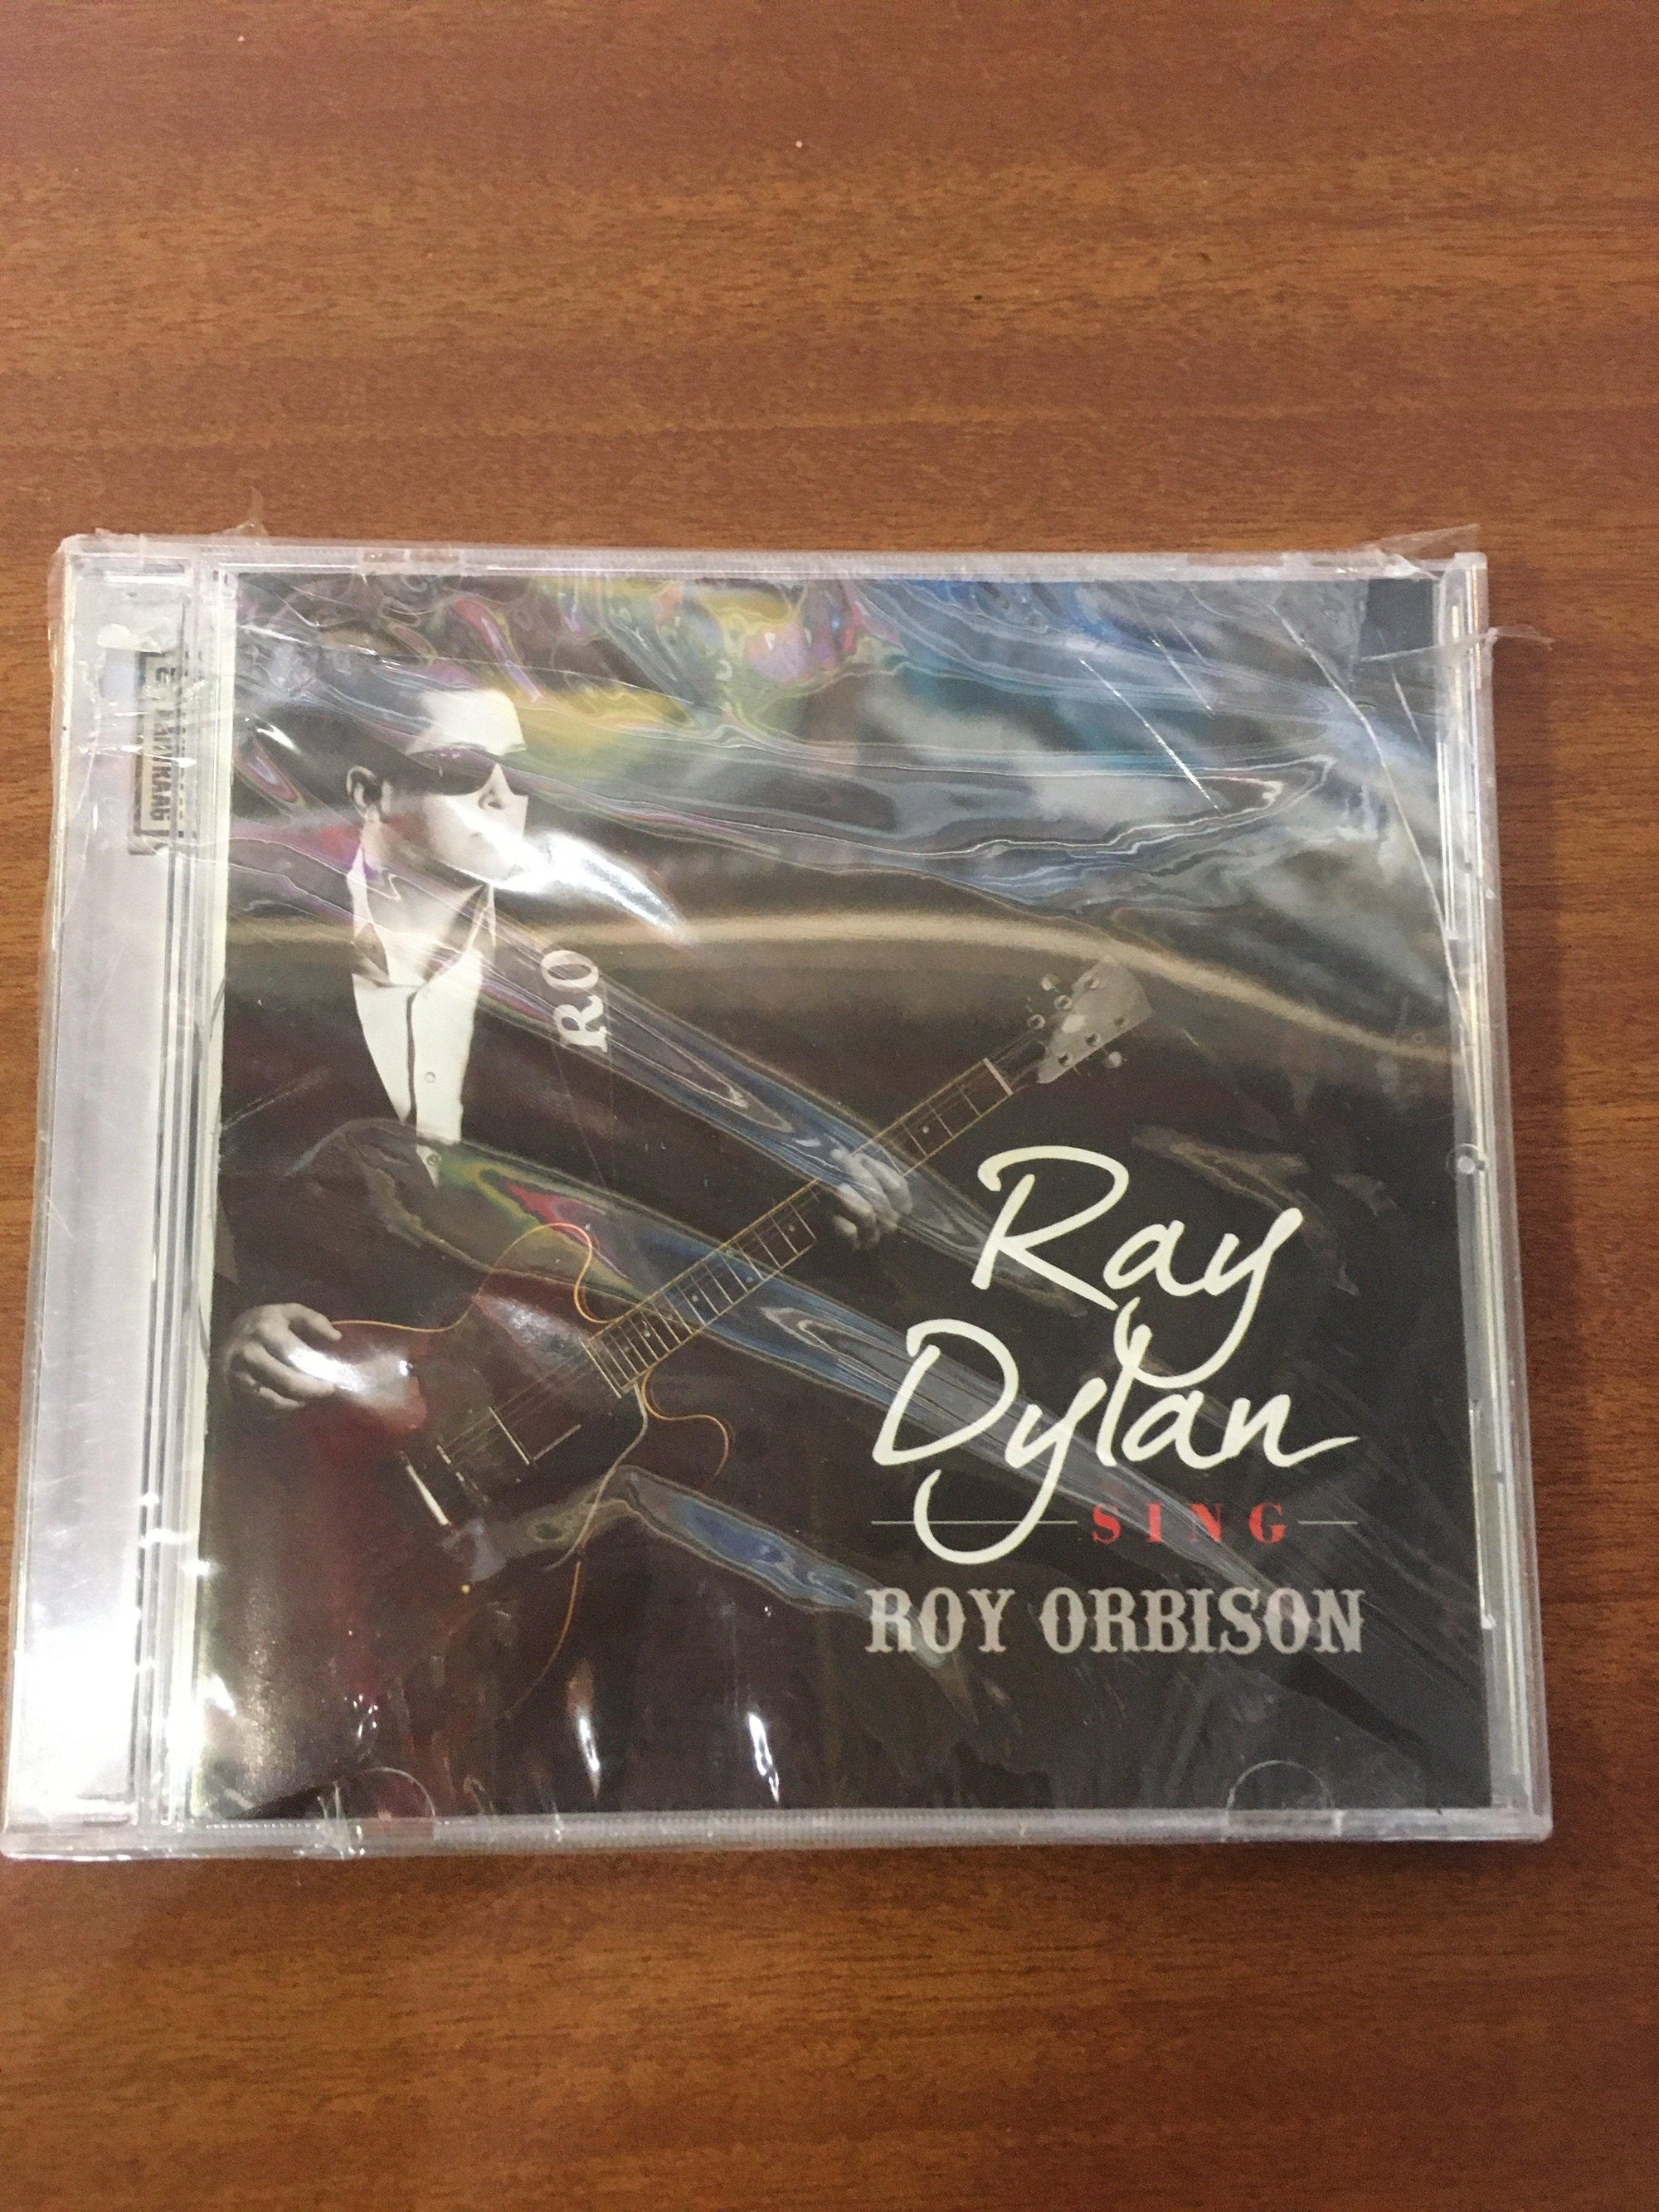 Ray Dylan - Sing (CD) - 2ndhandwarehouse.com